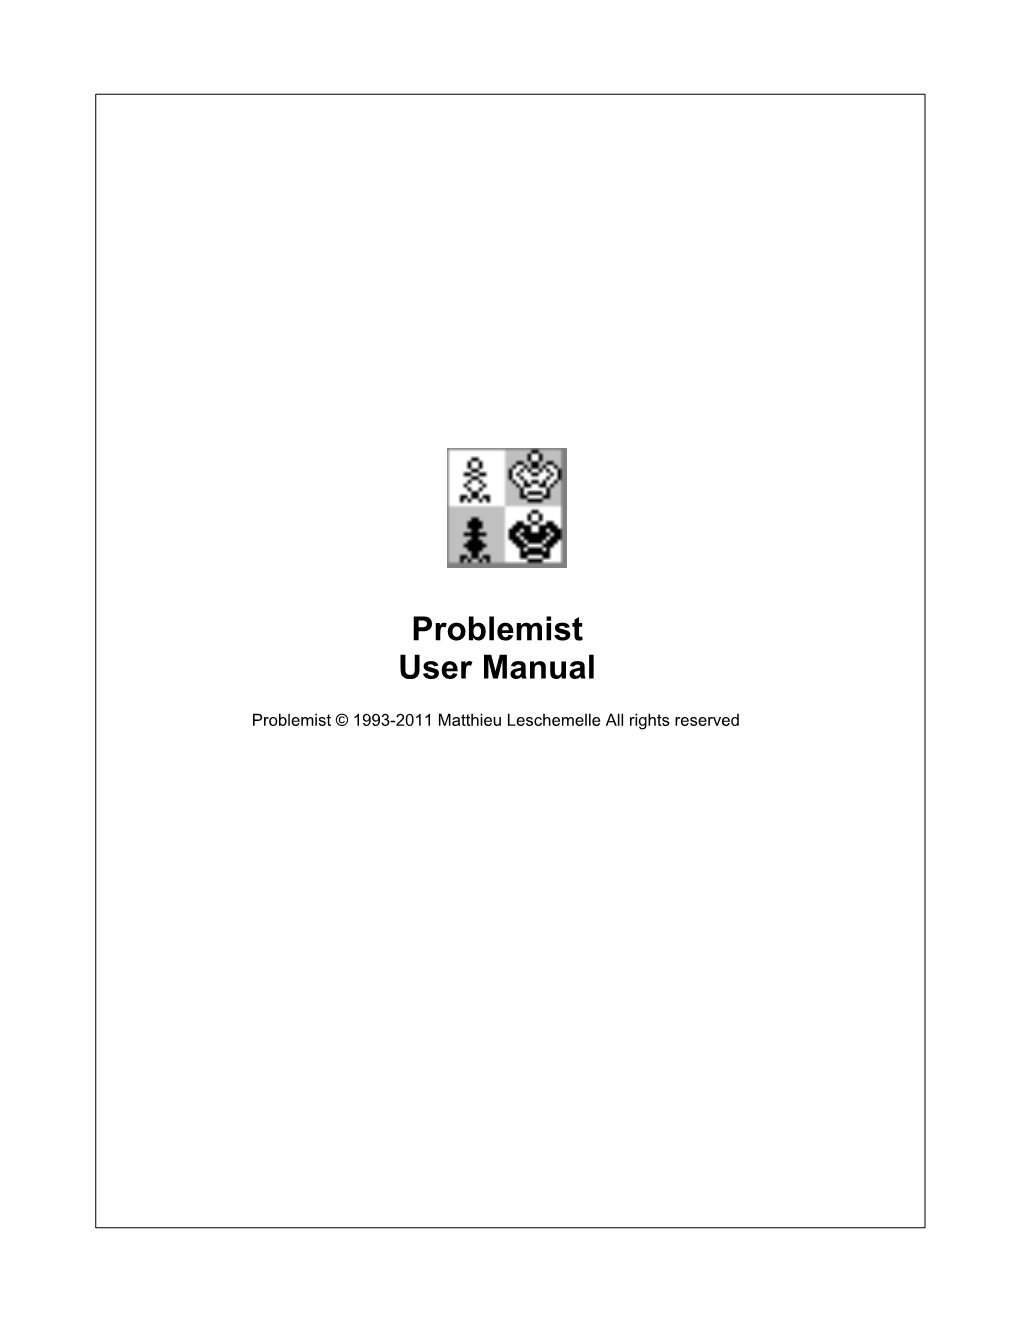 User Manual in PDF Format